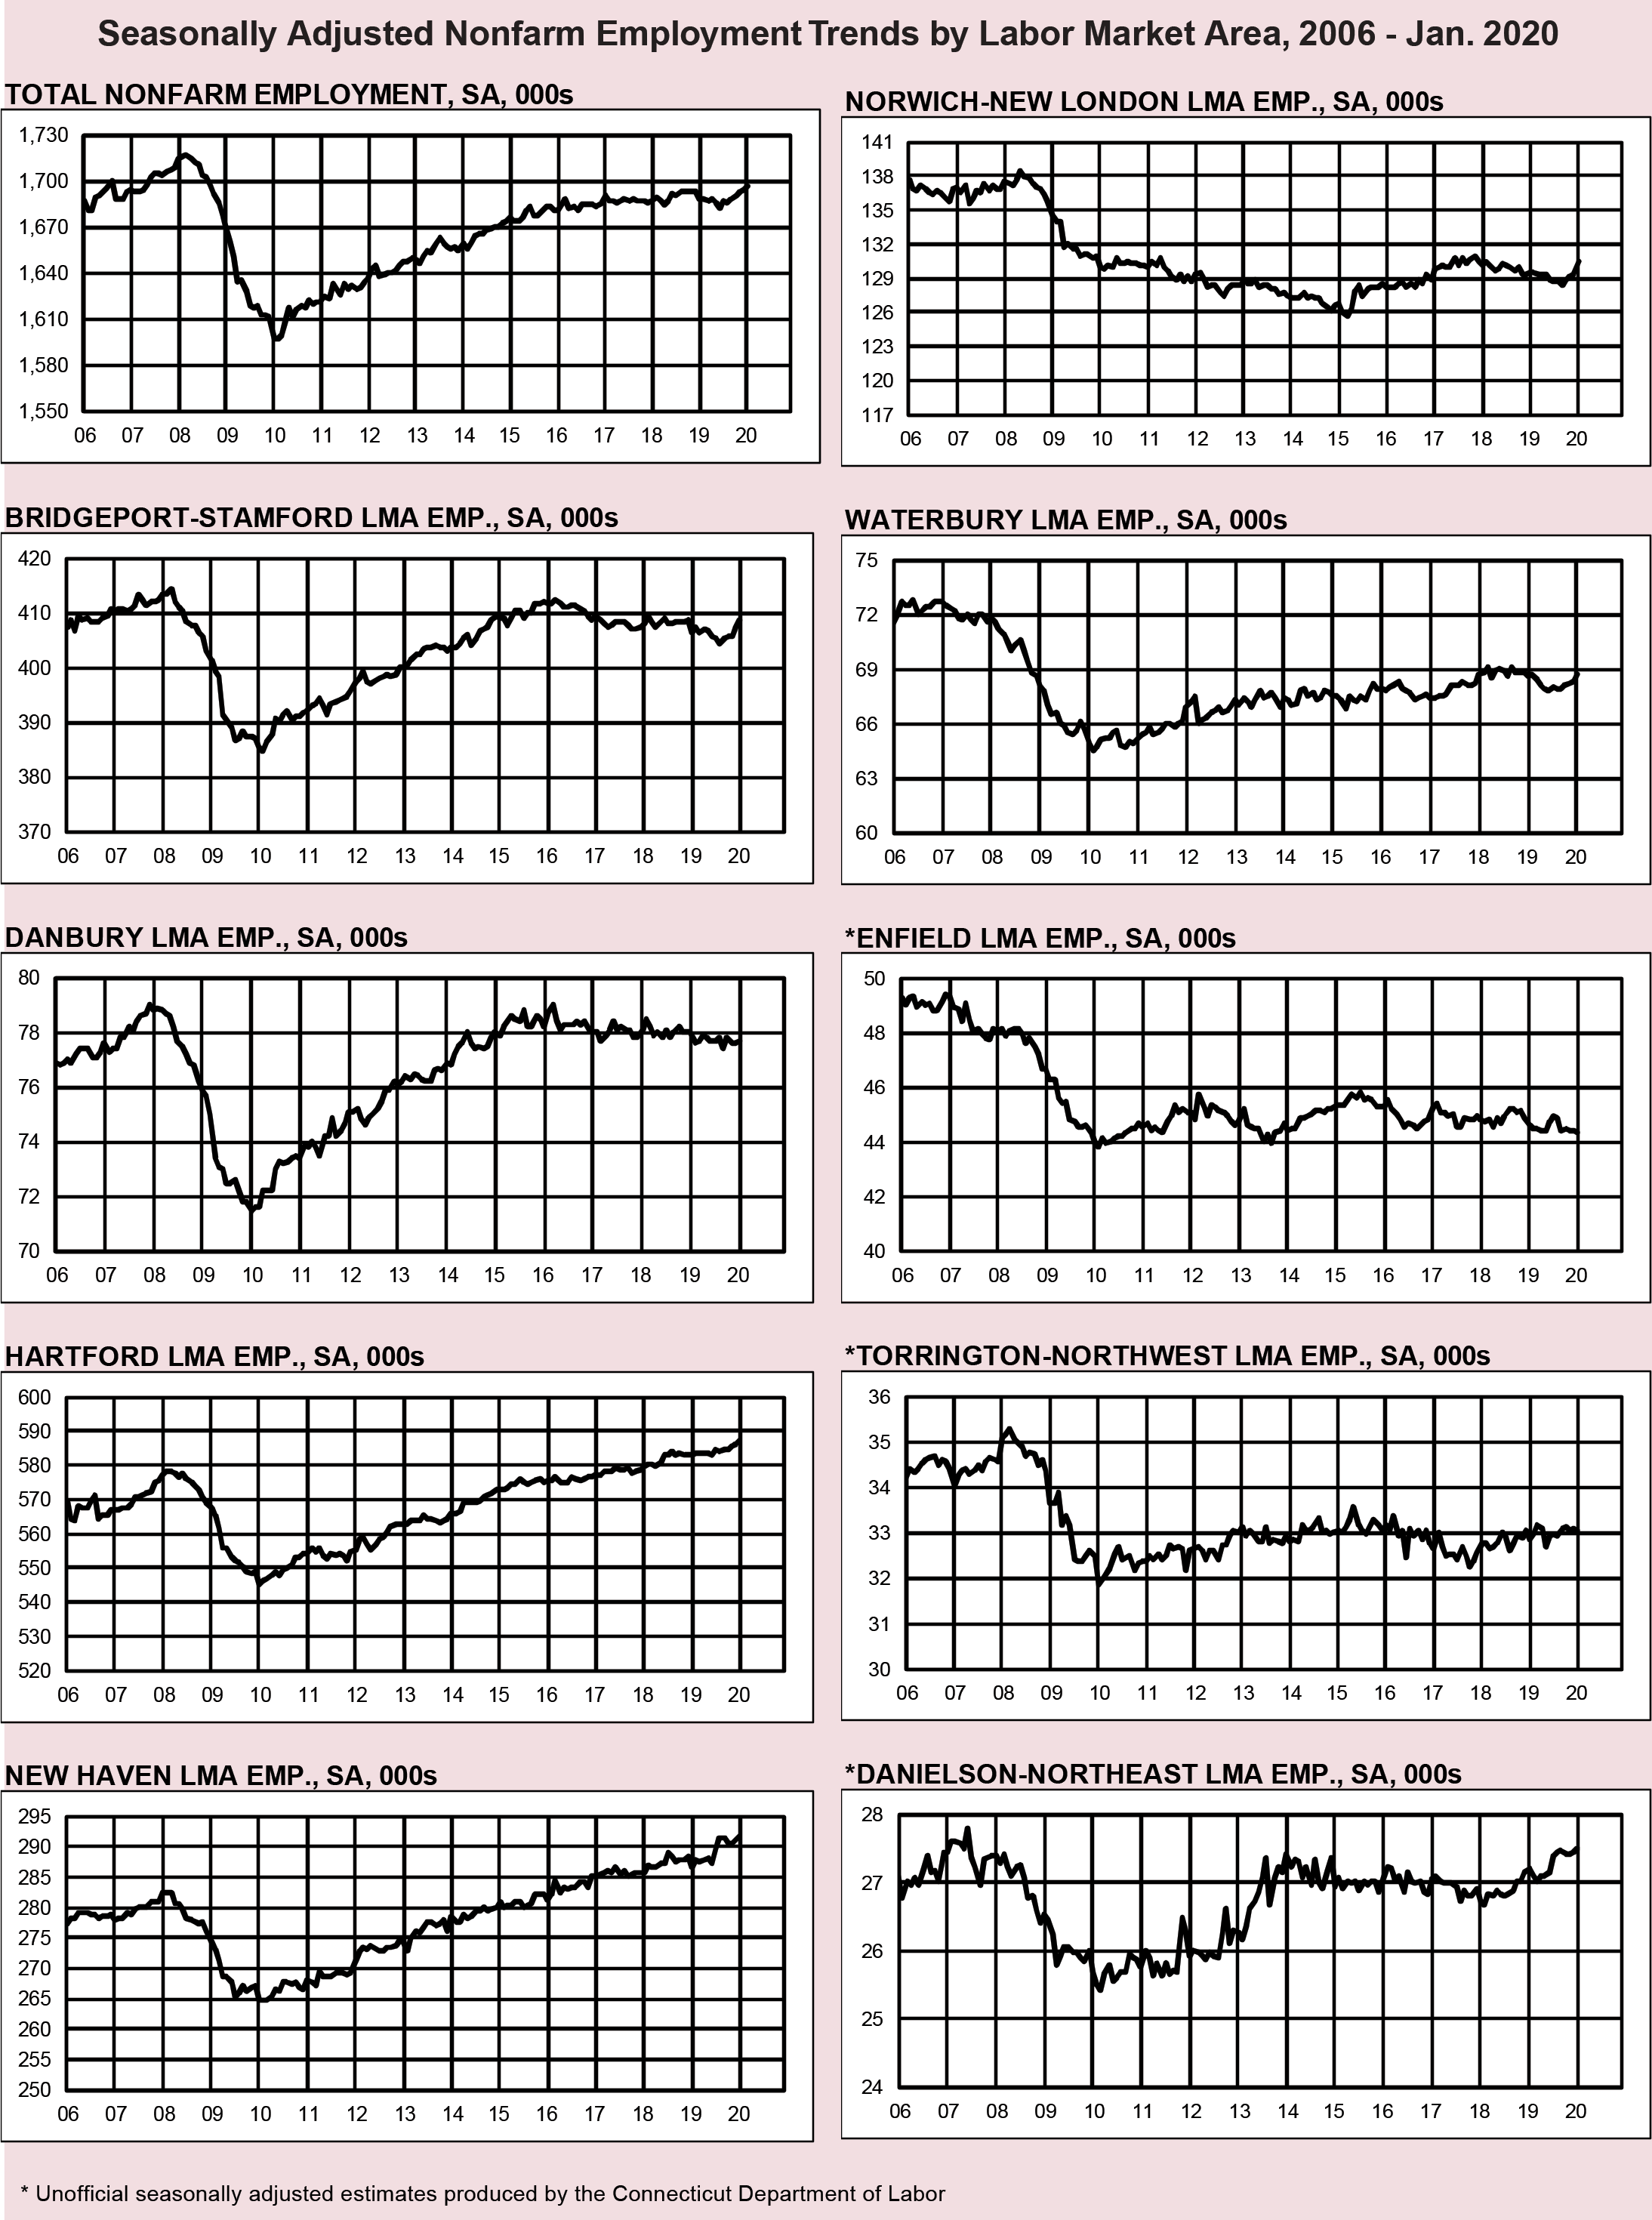 Chart 3. Seasonally Adjusted Nonfarm Employment Trends by Labor Market Area, 2006 - Jan. 2020